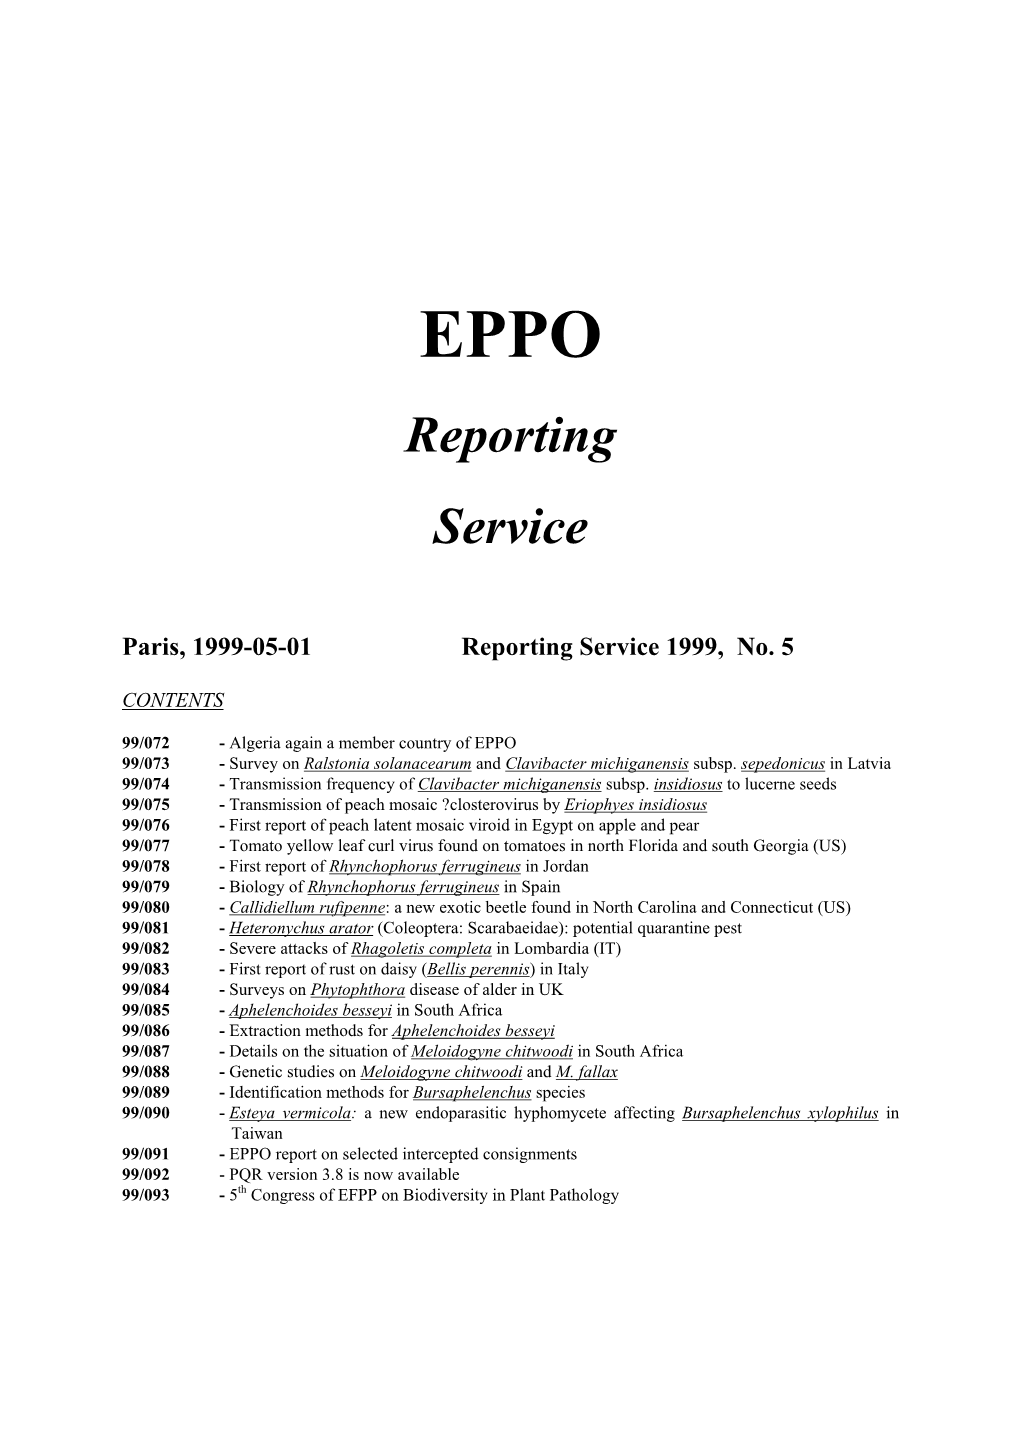 Reporting Service 1999, No